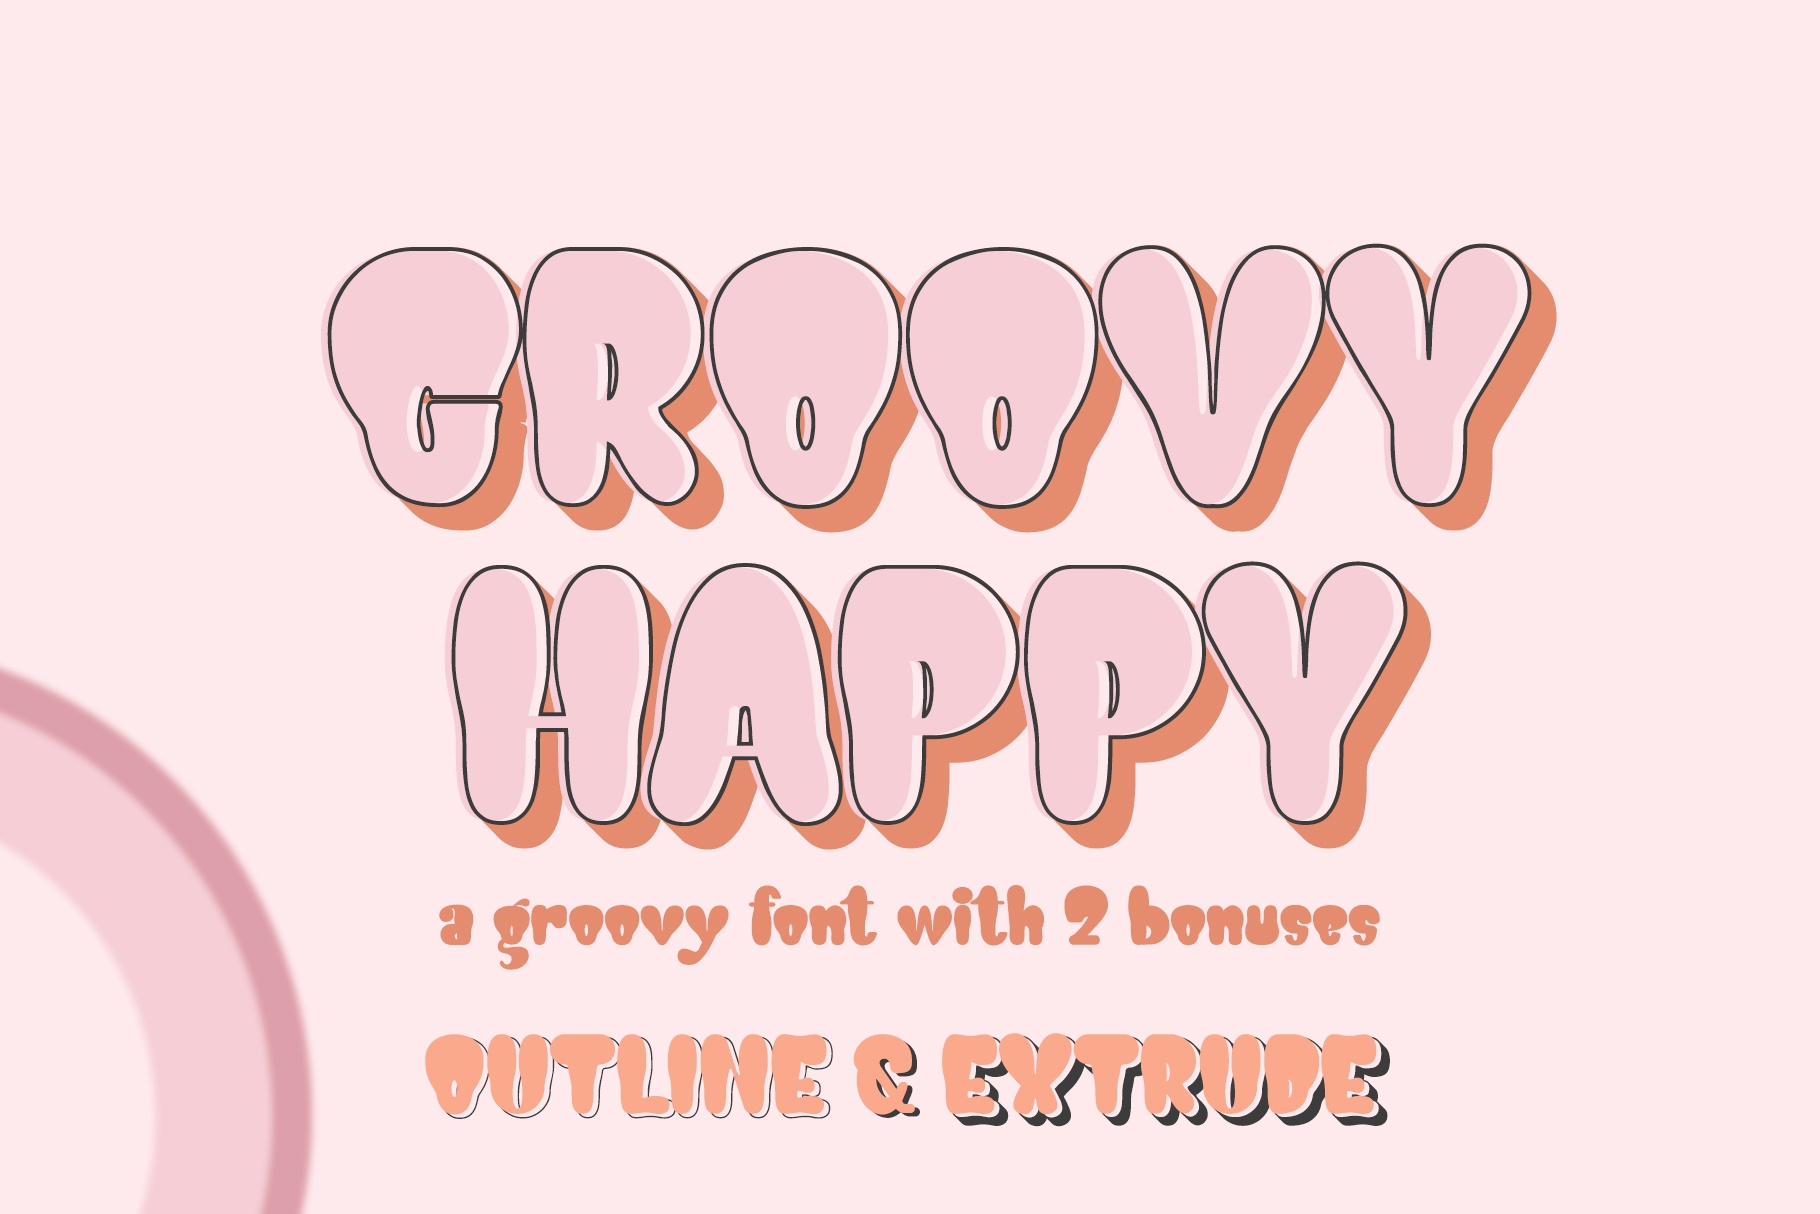 Font Groovy Happy